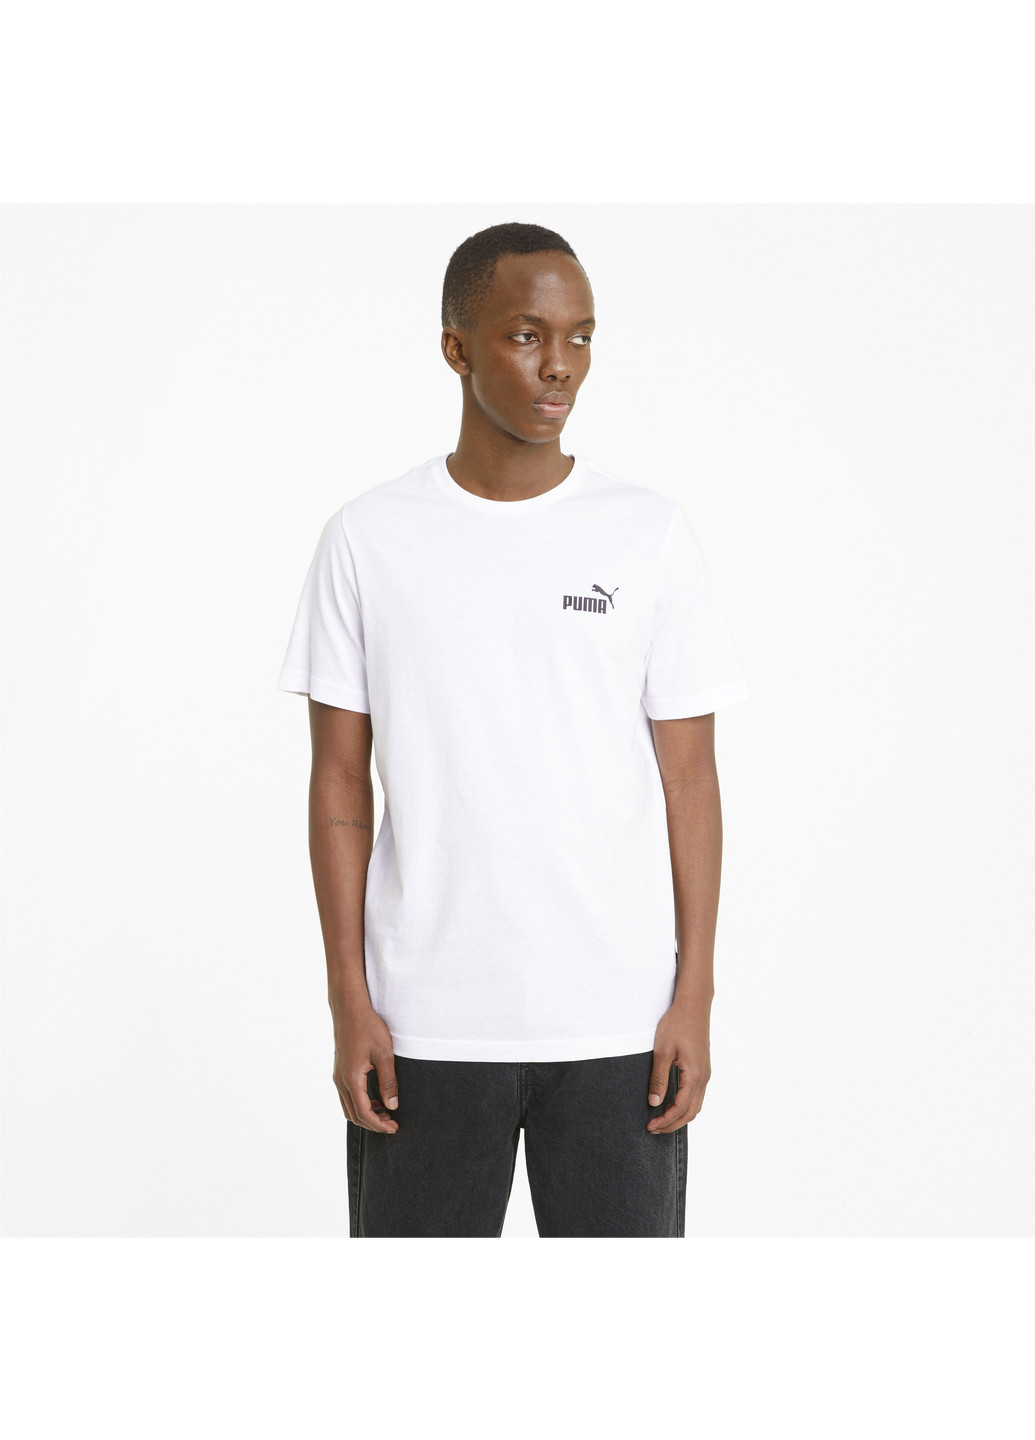 Белая футболка essentials small logo men's tee Puma